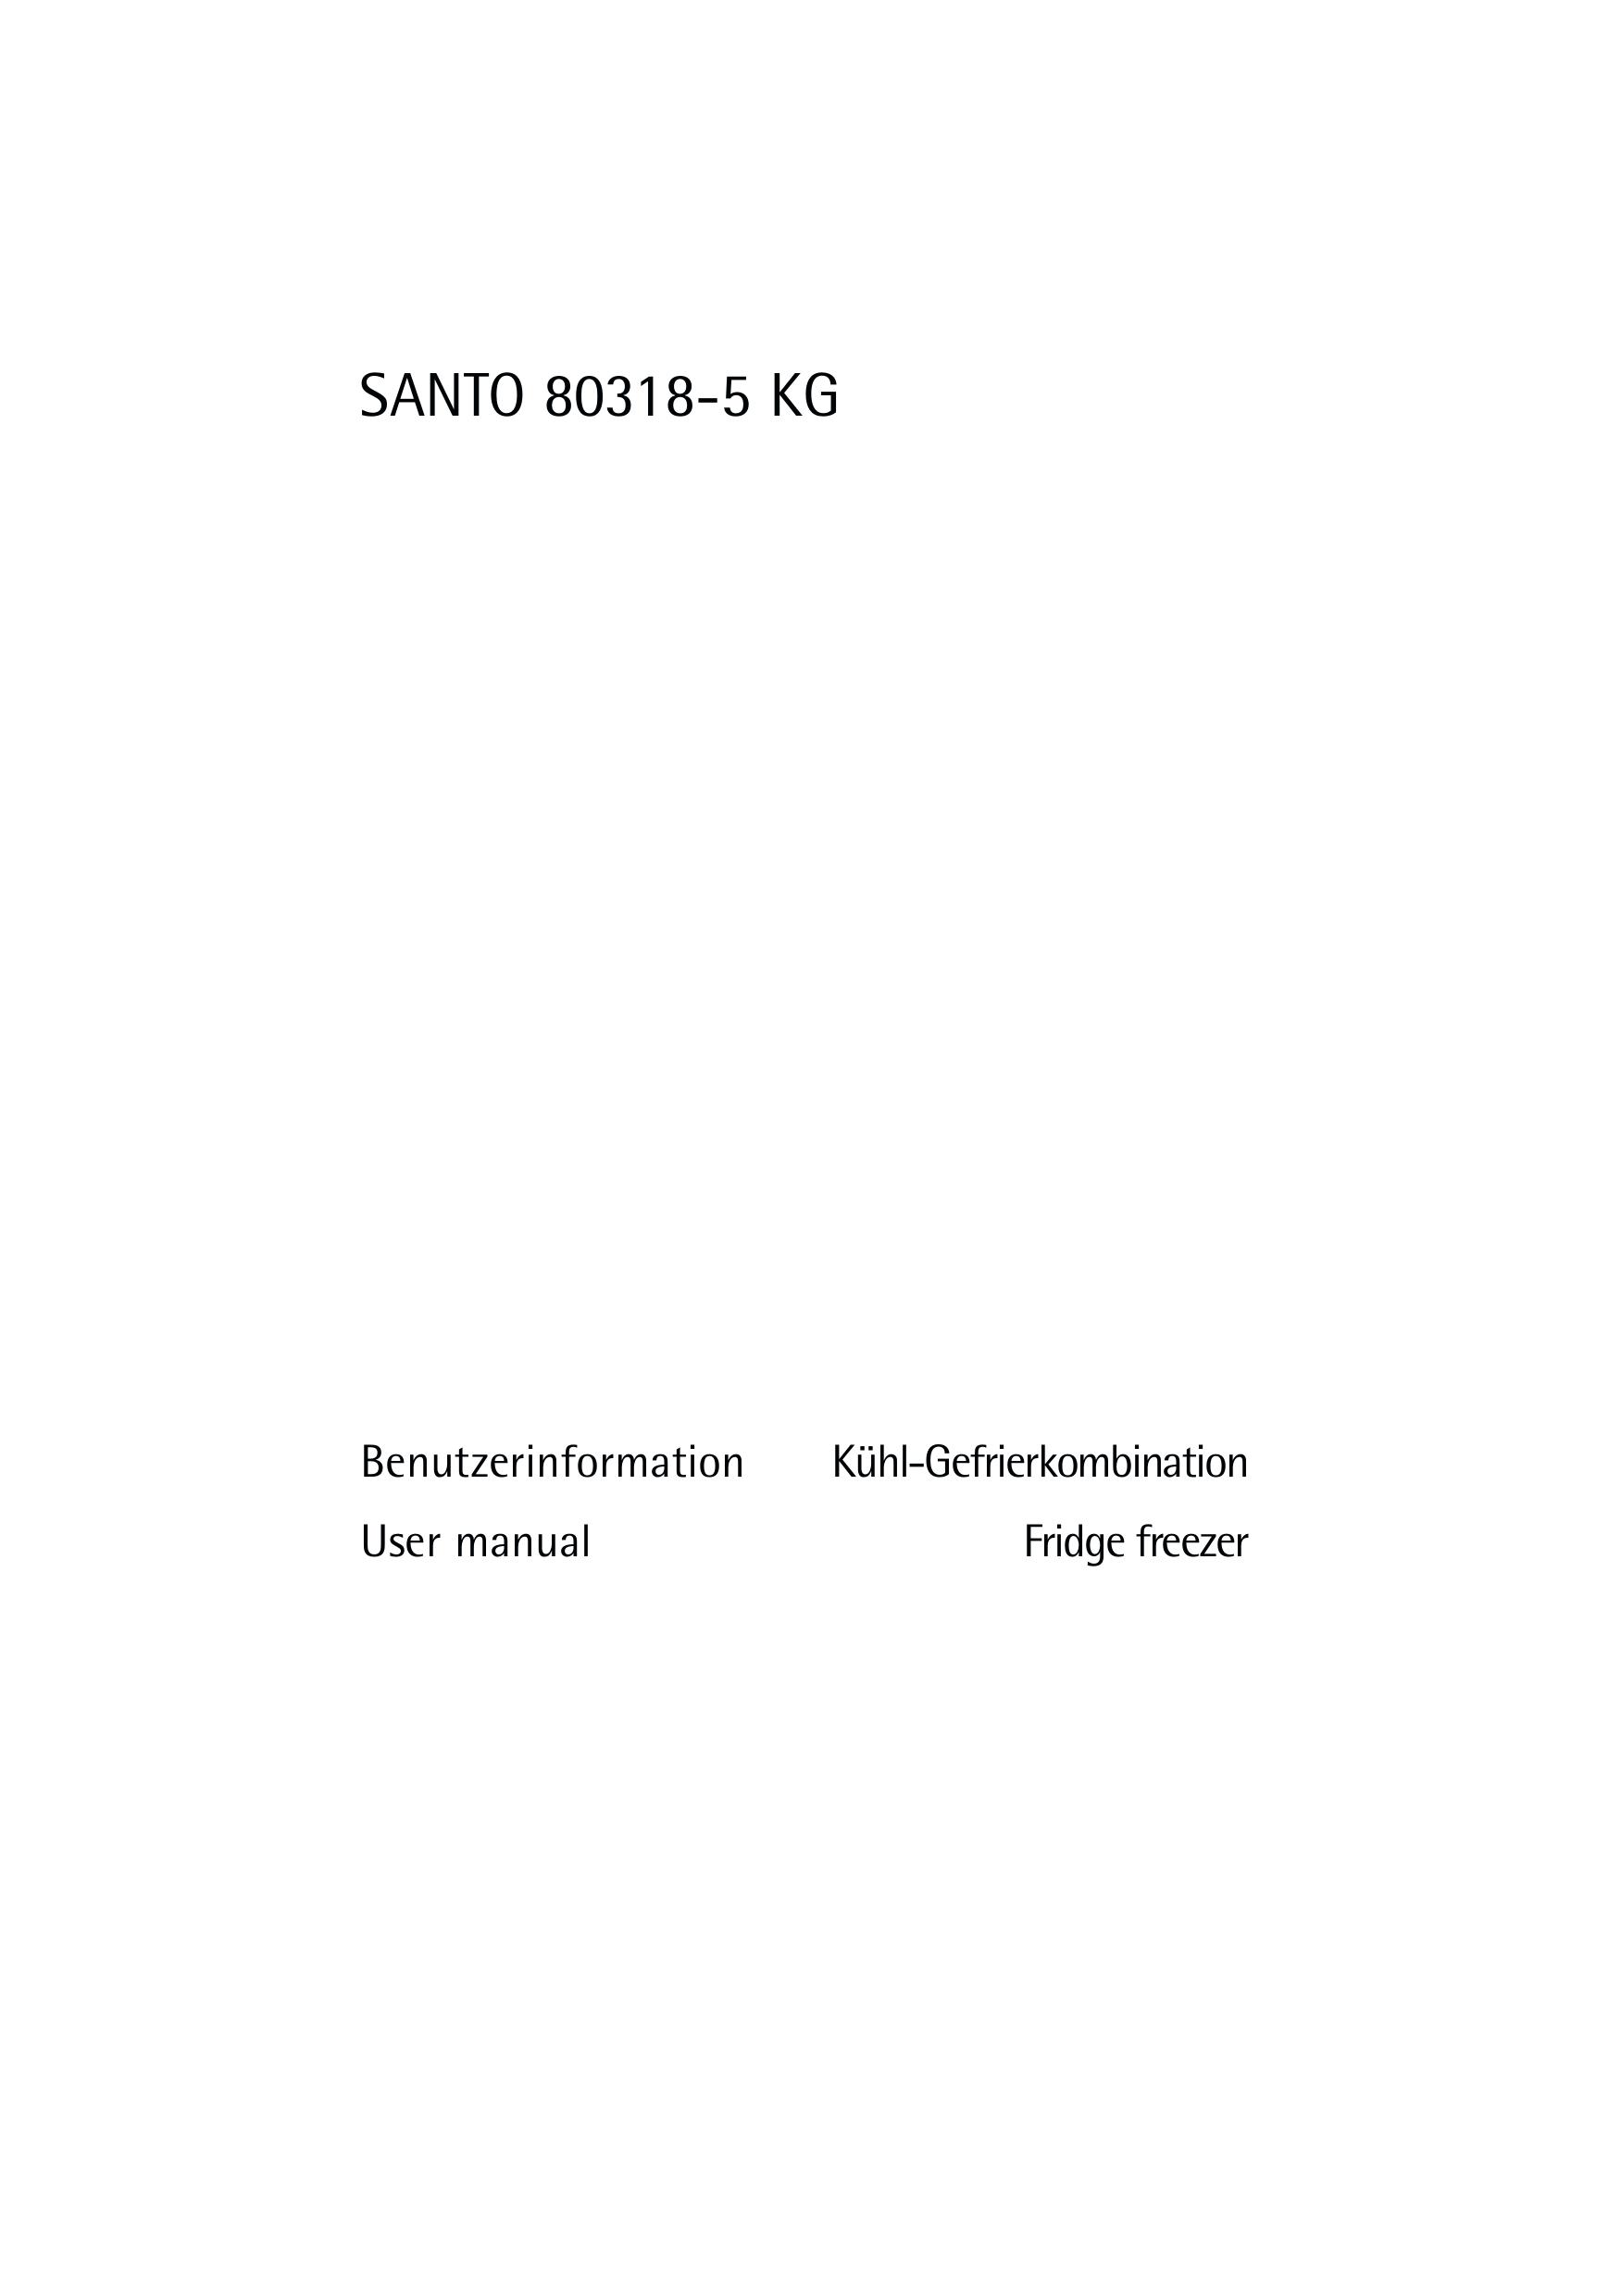 AEG 80318-5 KG Refrigerator User Manual